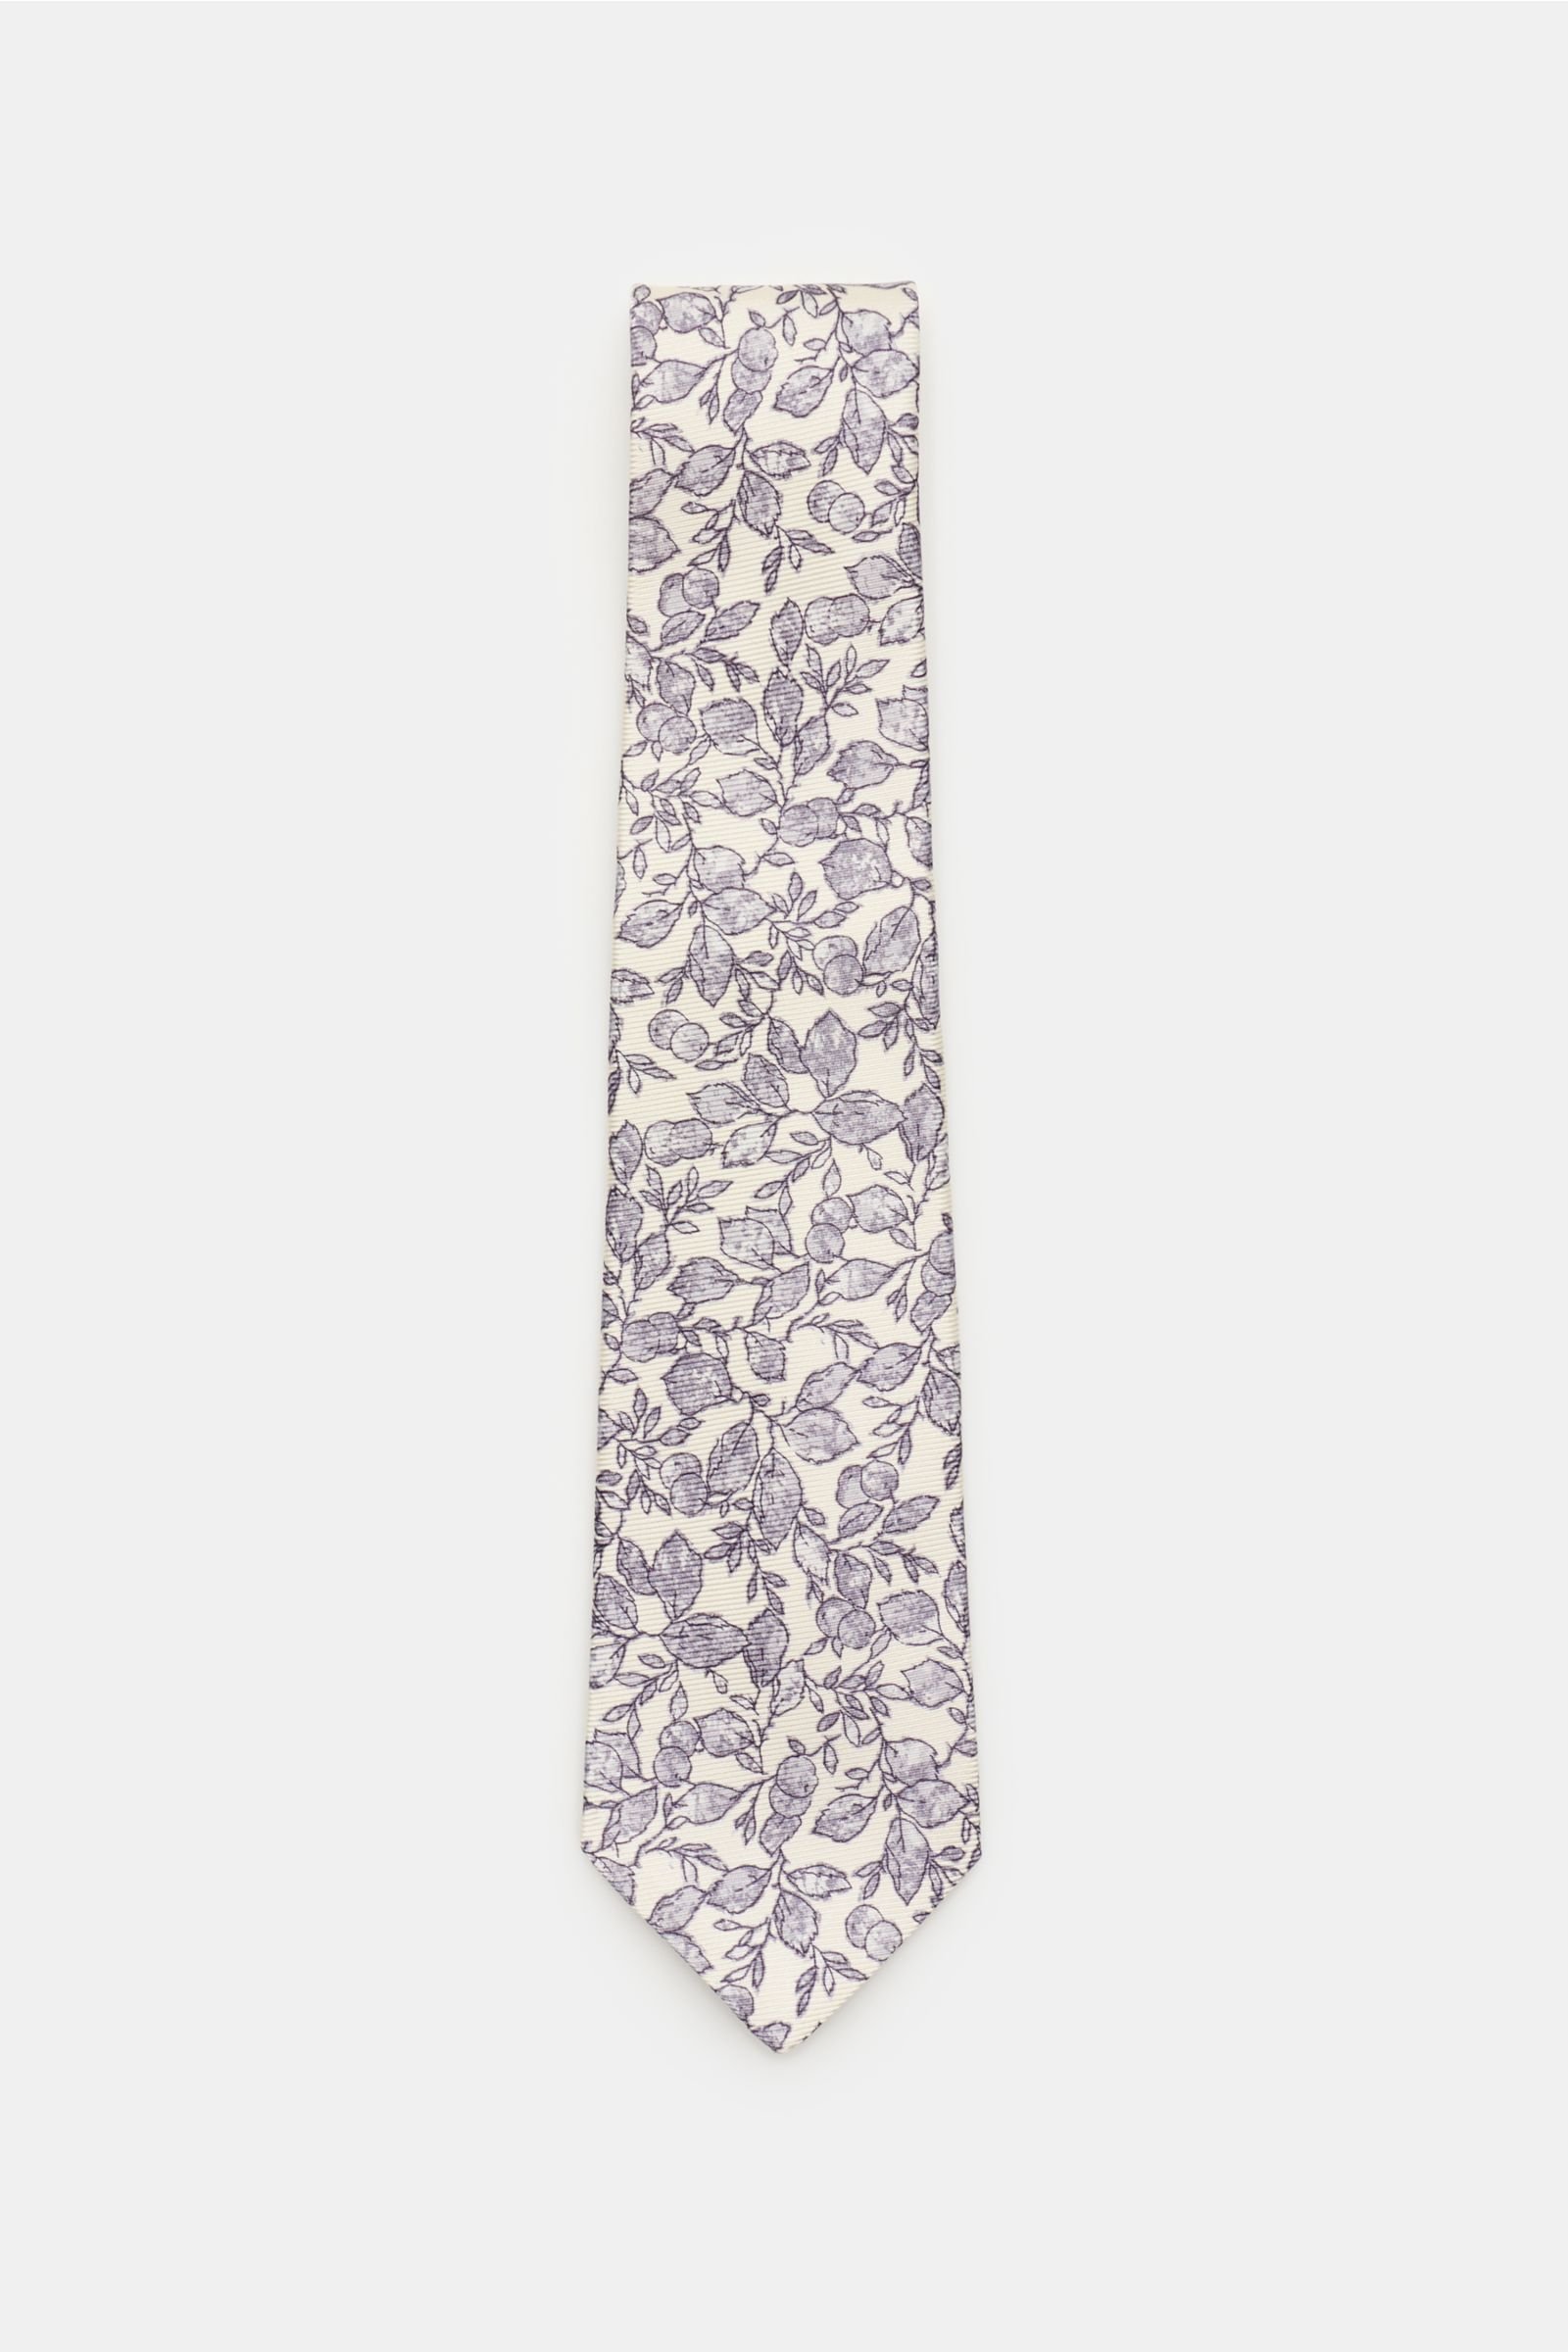 Silk tie light grey/cream patterned